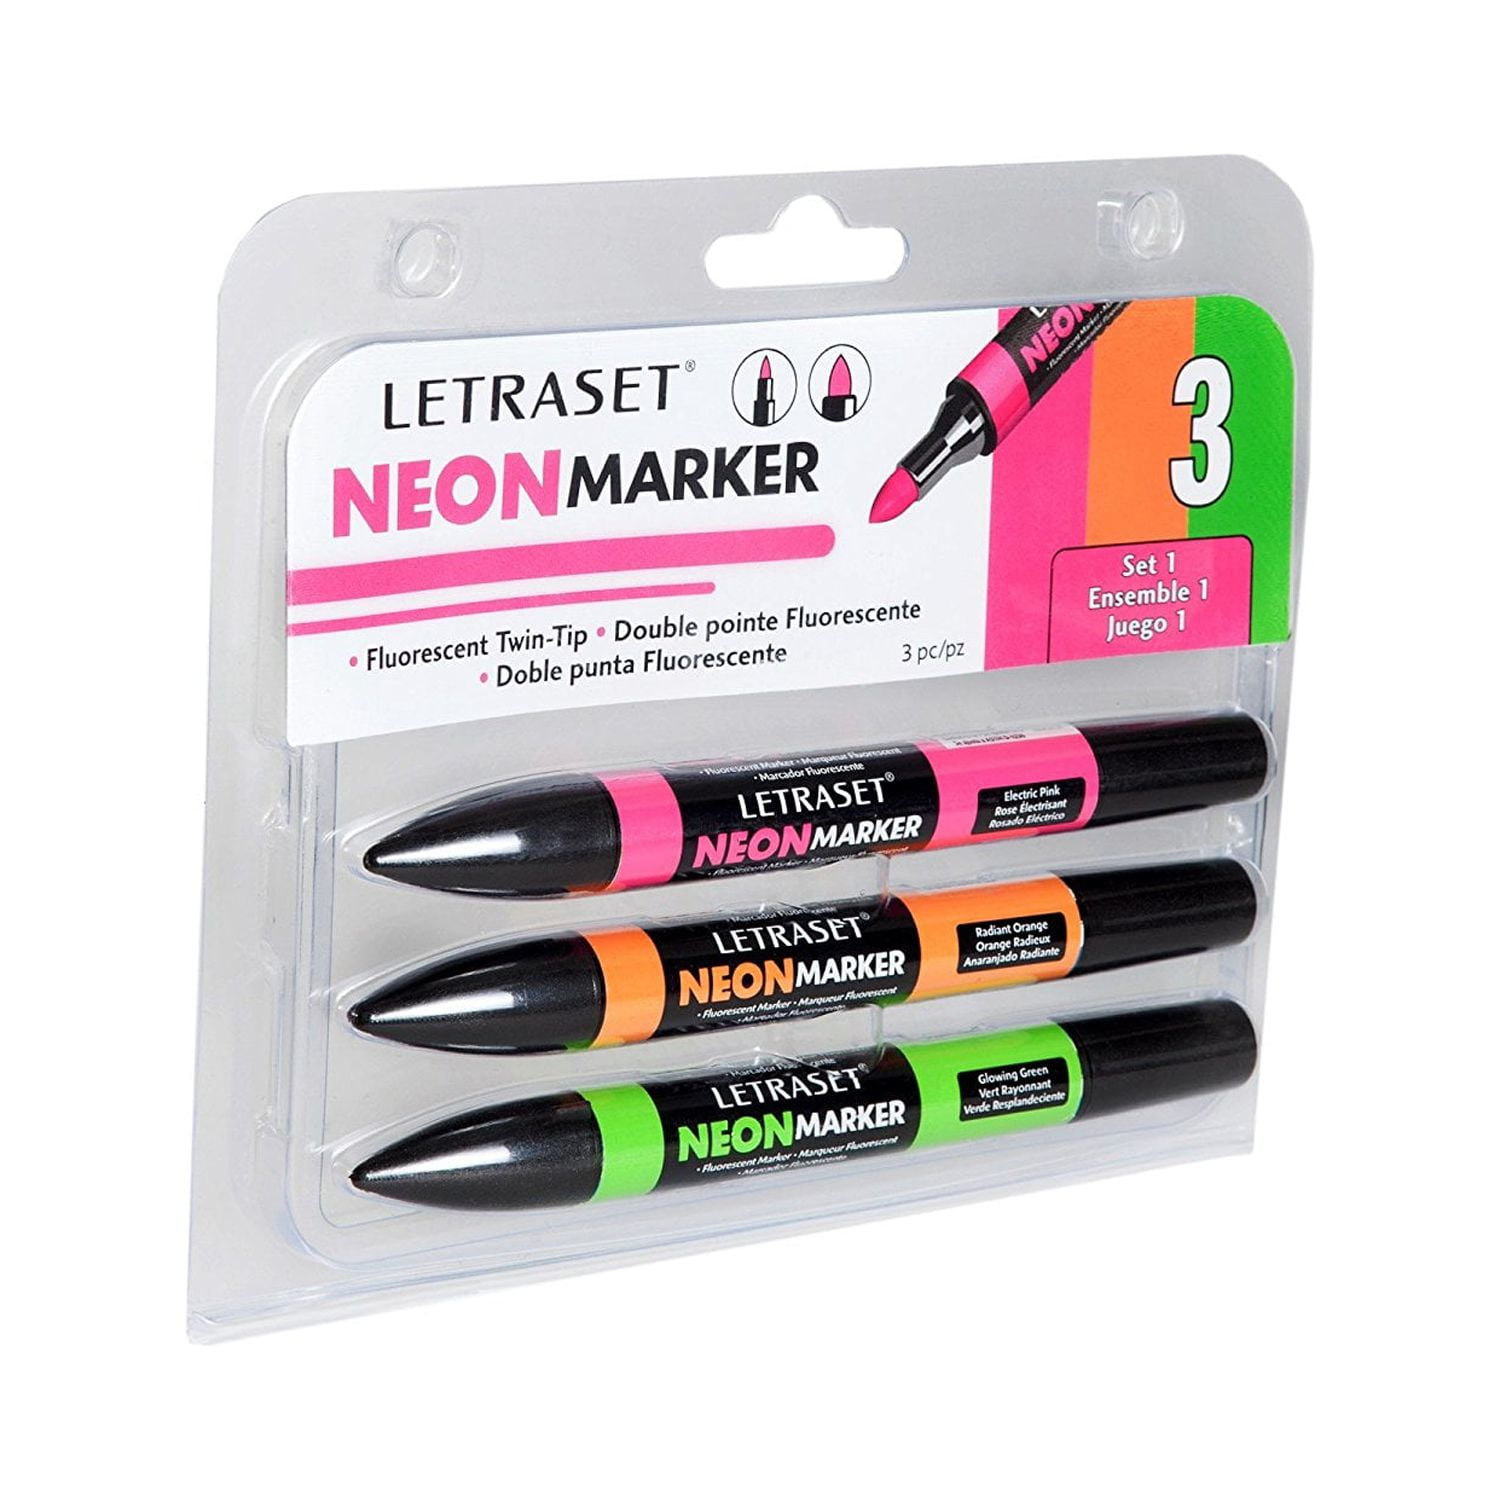 LETRASET Twin Tip NeonMarker Fluorescent Color Set 1 - 3 Count